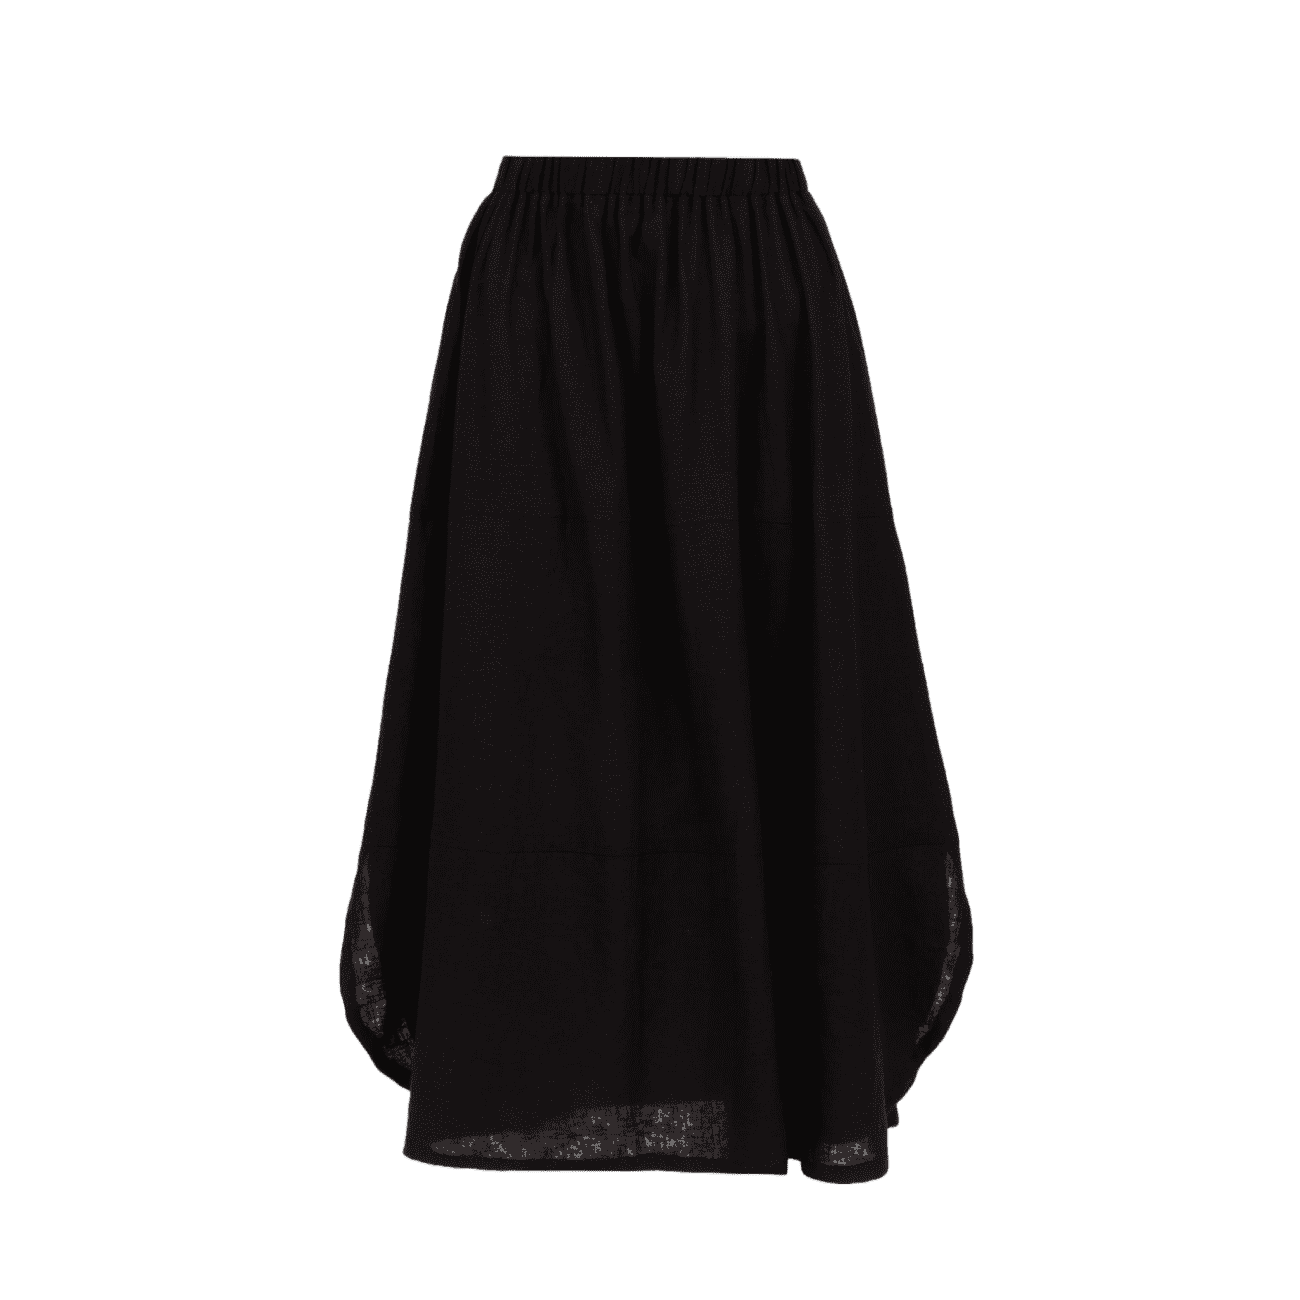 Pilli skirt